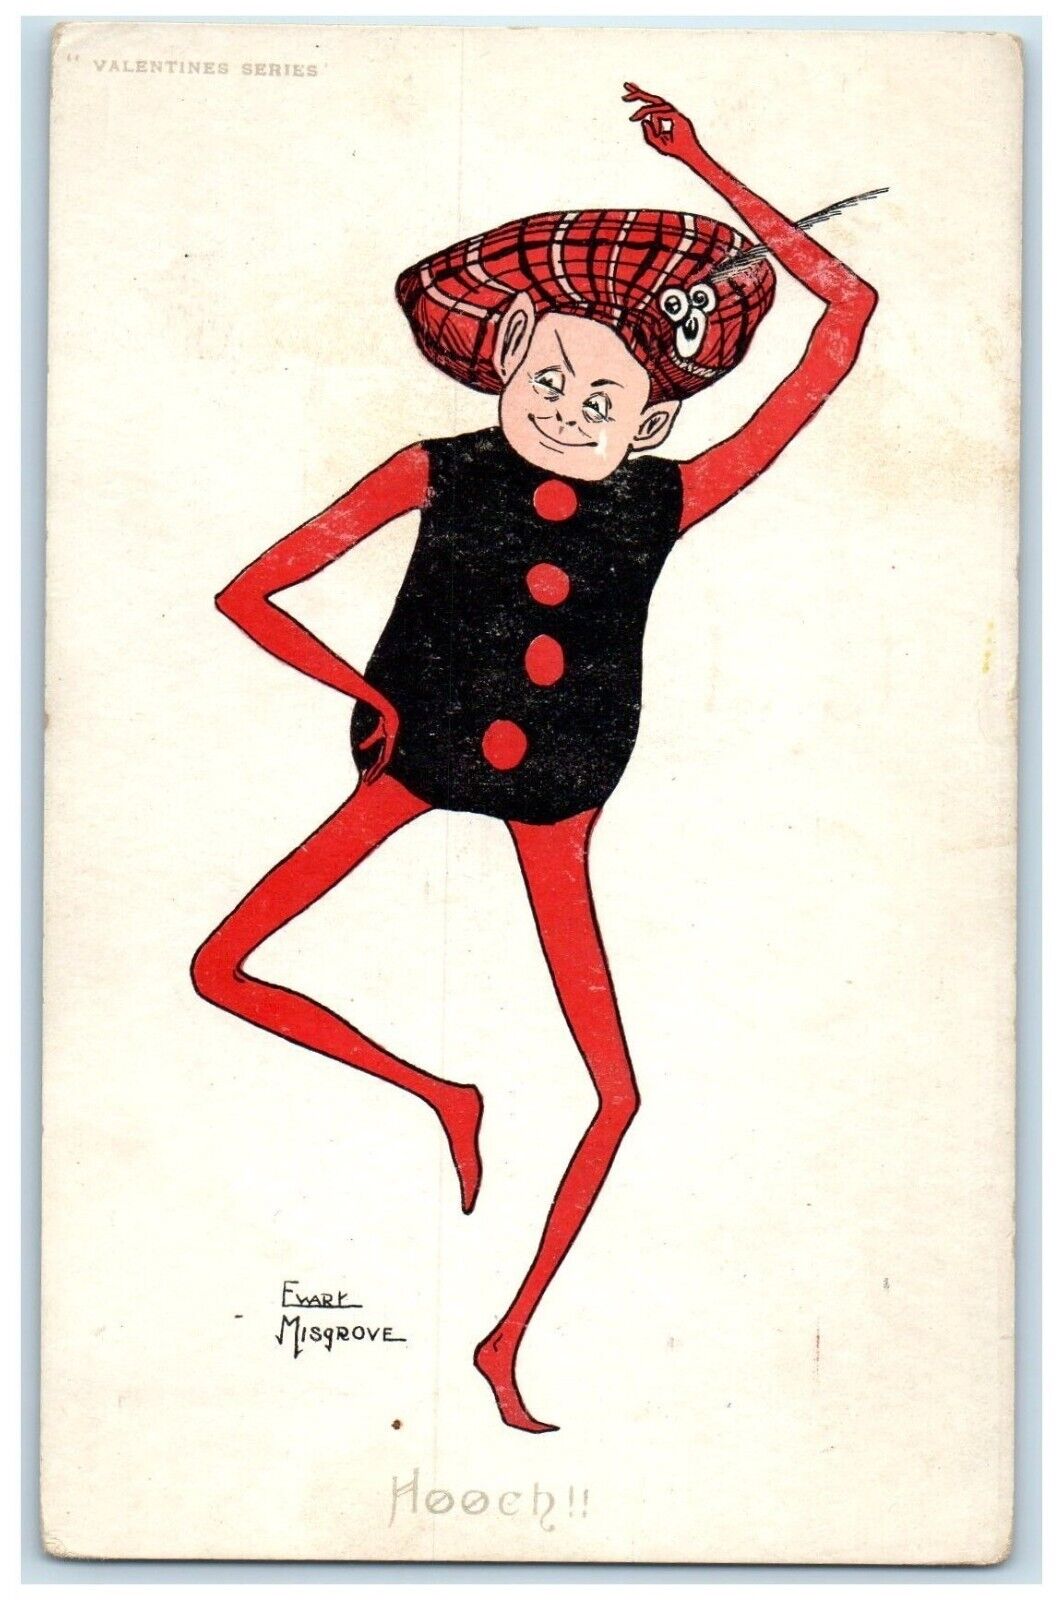 1907 Valentine Man Hooch Ewary Misgrove San Francisco California CA Postcard